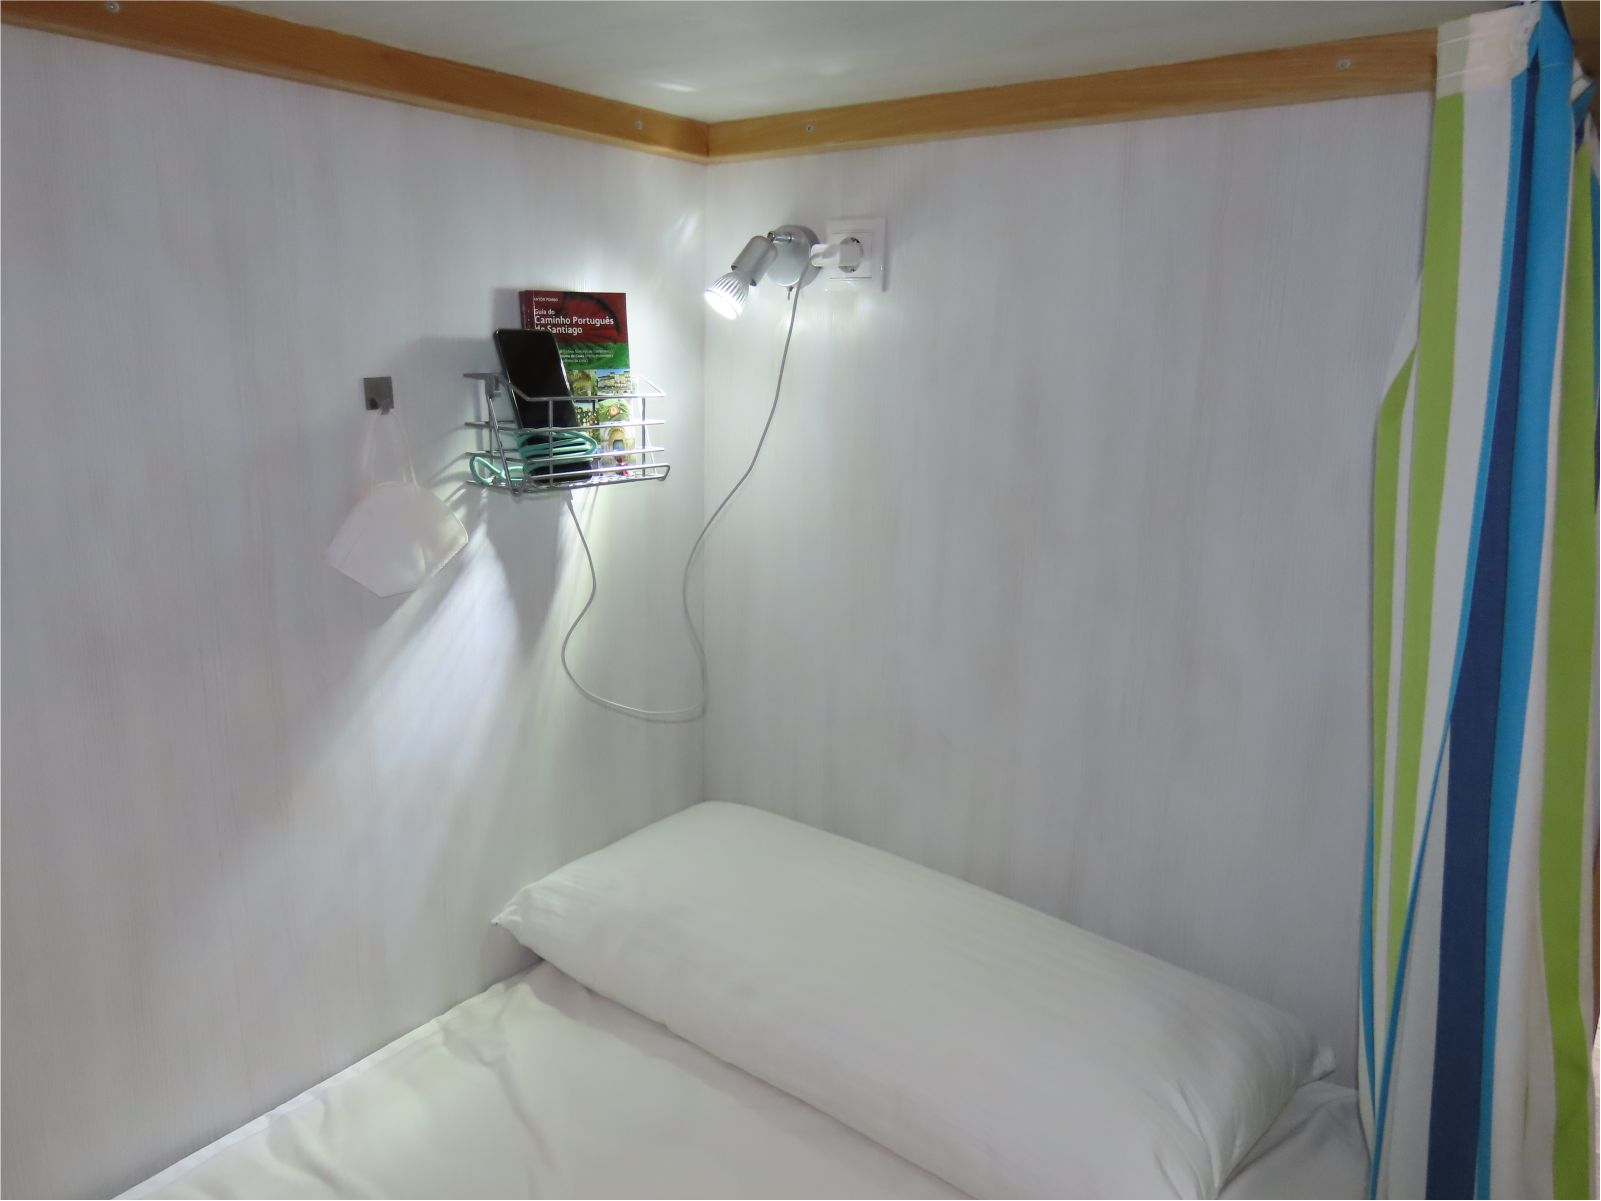 Cama con cesto, luz y enchufe - Bed with basket, light and plugg